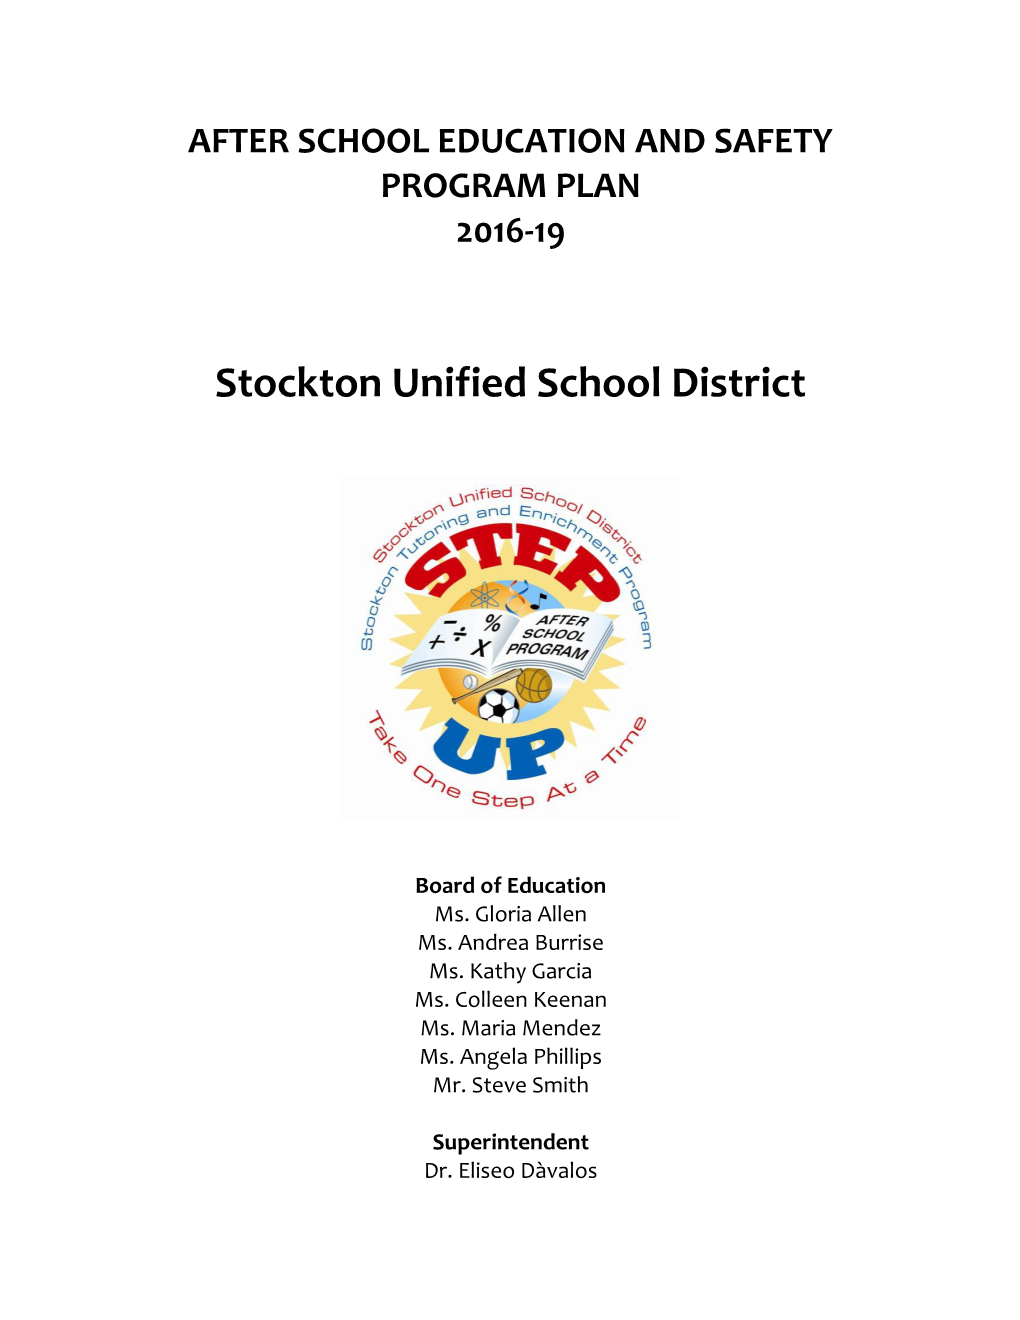 Program Plan Guide for Grantees - After School Education & Safety Program (CDE Interent)